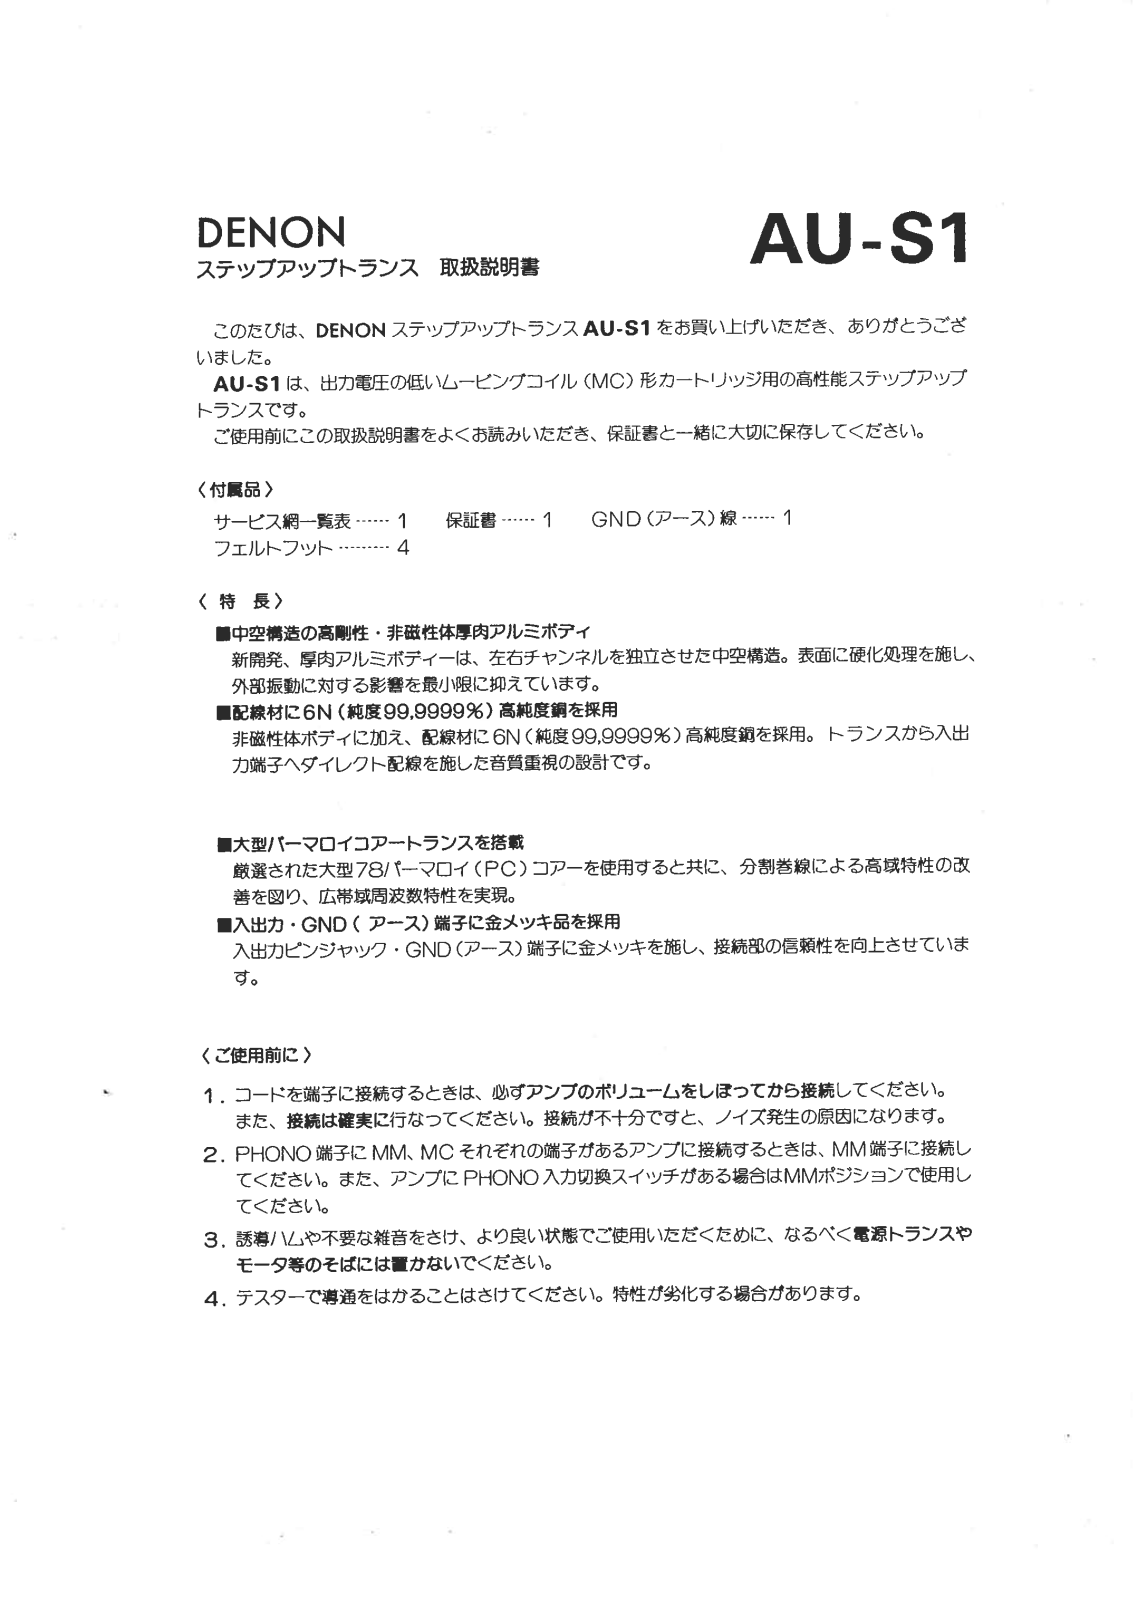 Denon AU-S1 Owner's Manual